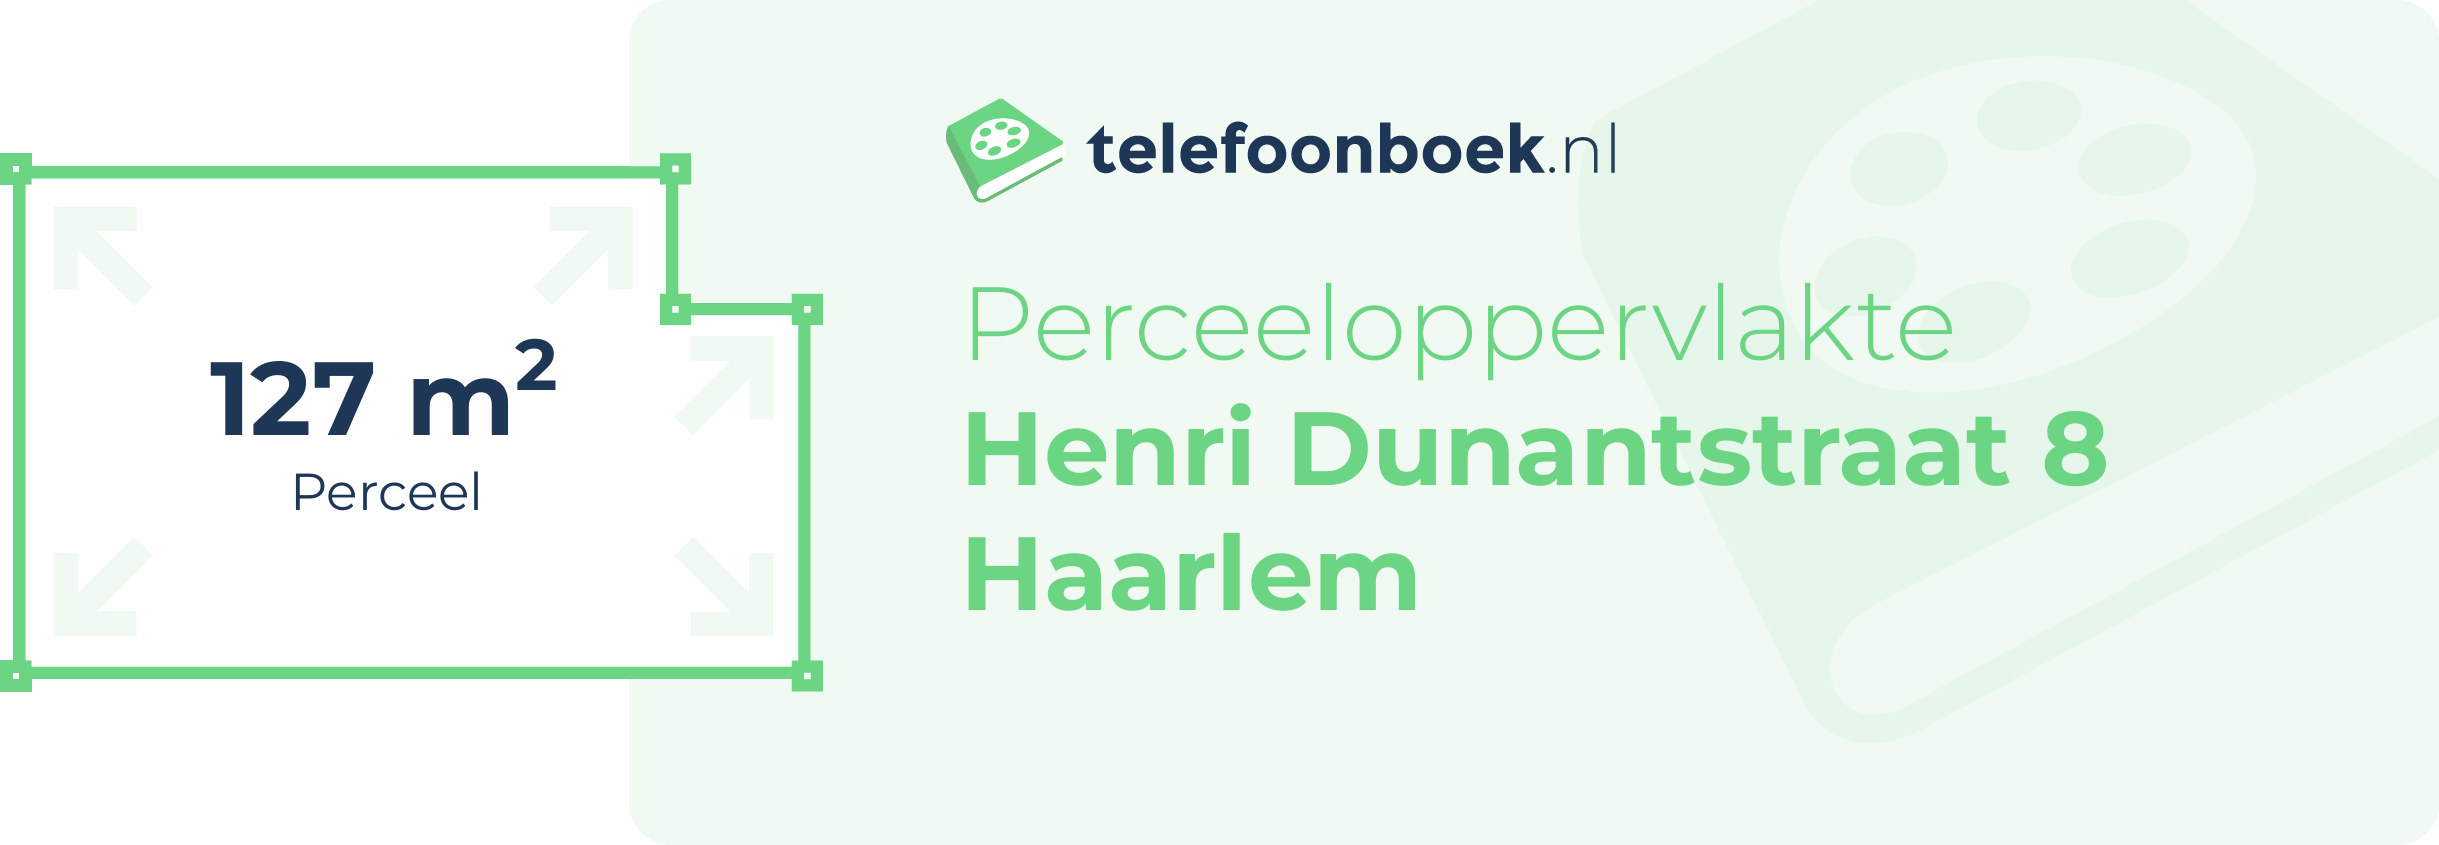 Perceeloppervlakte Henri Dunantstraat 8 Haarlem